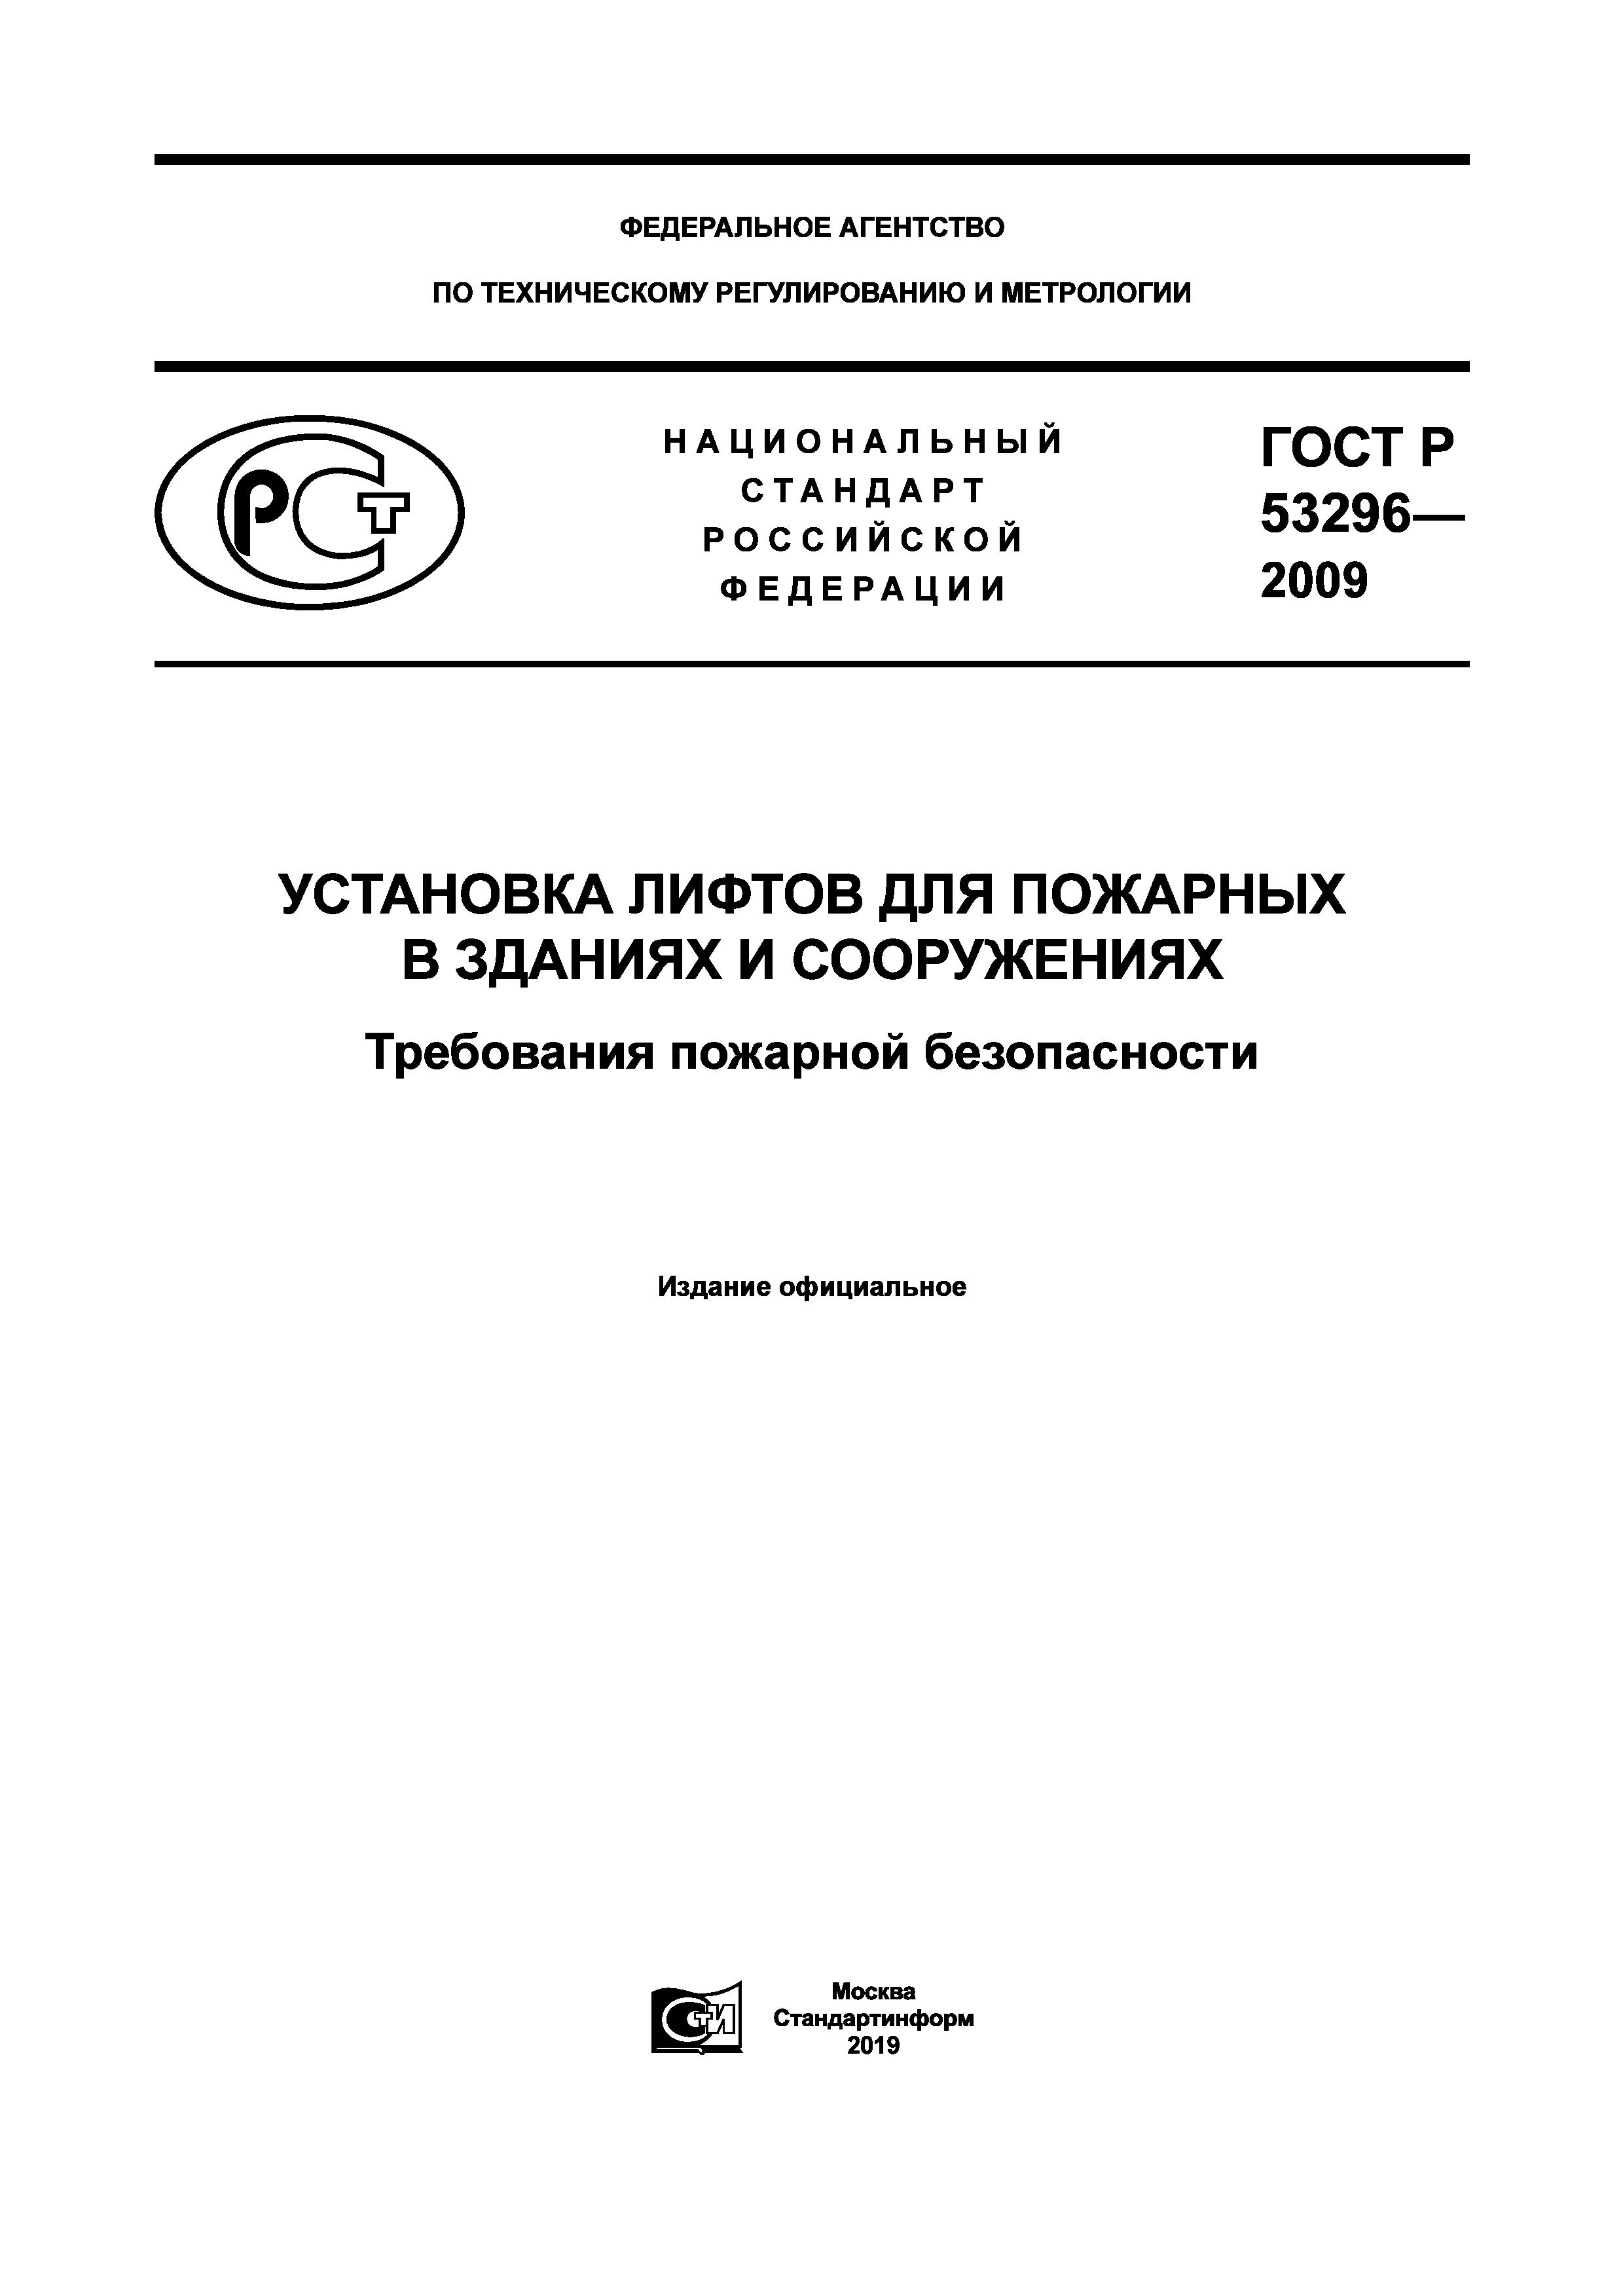 ГОСТ Р 53296-2009